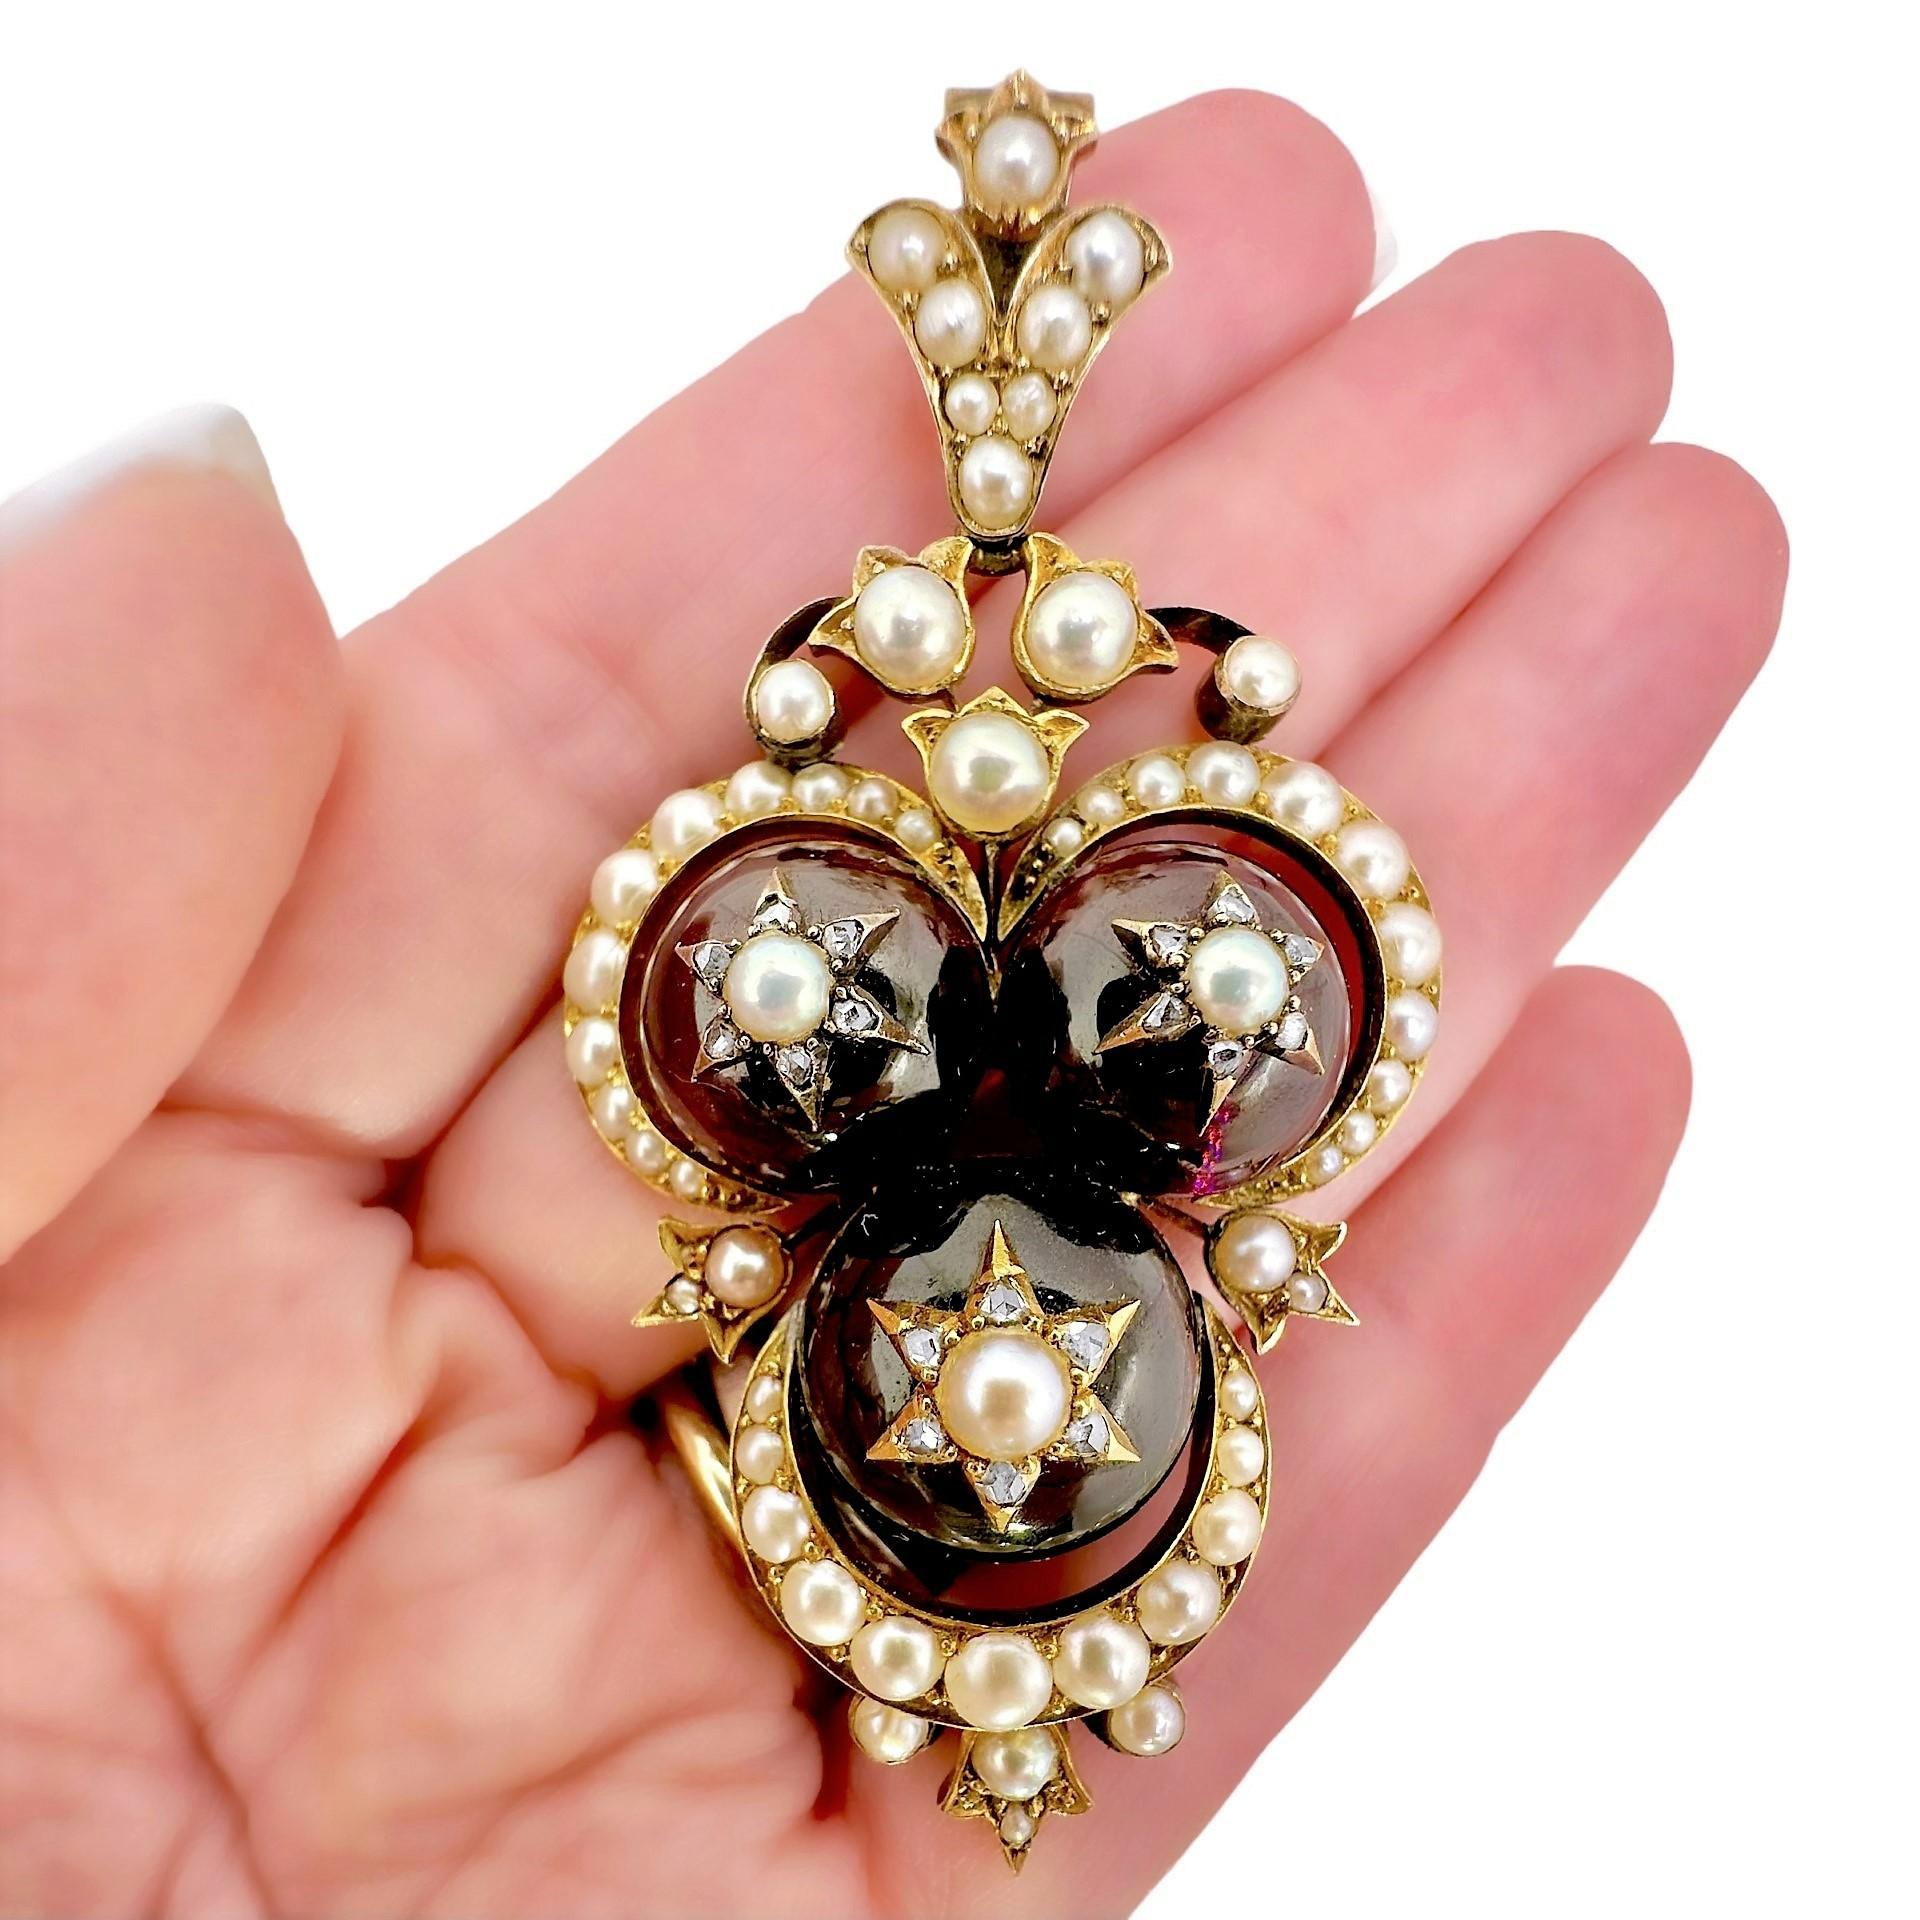 Unique Victorian Period 18k Gold, Half Pearl and Garnet Carbuncle Pendant  For Sale 2